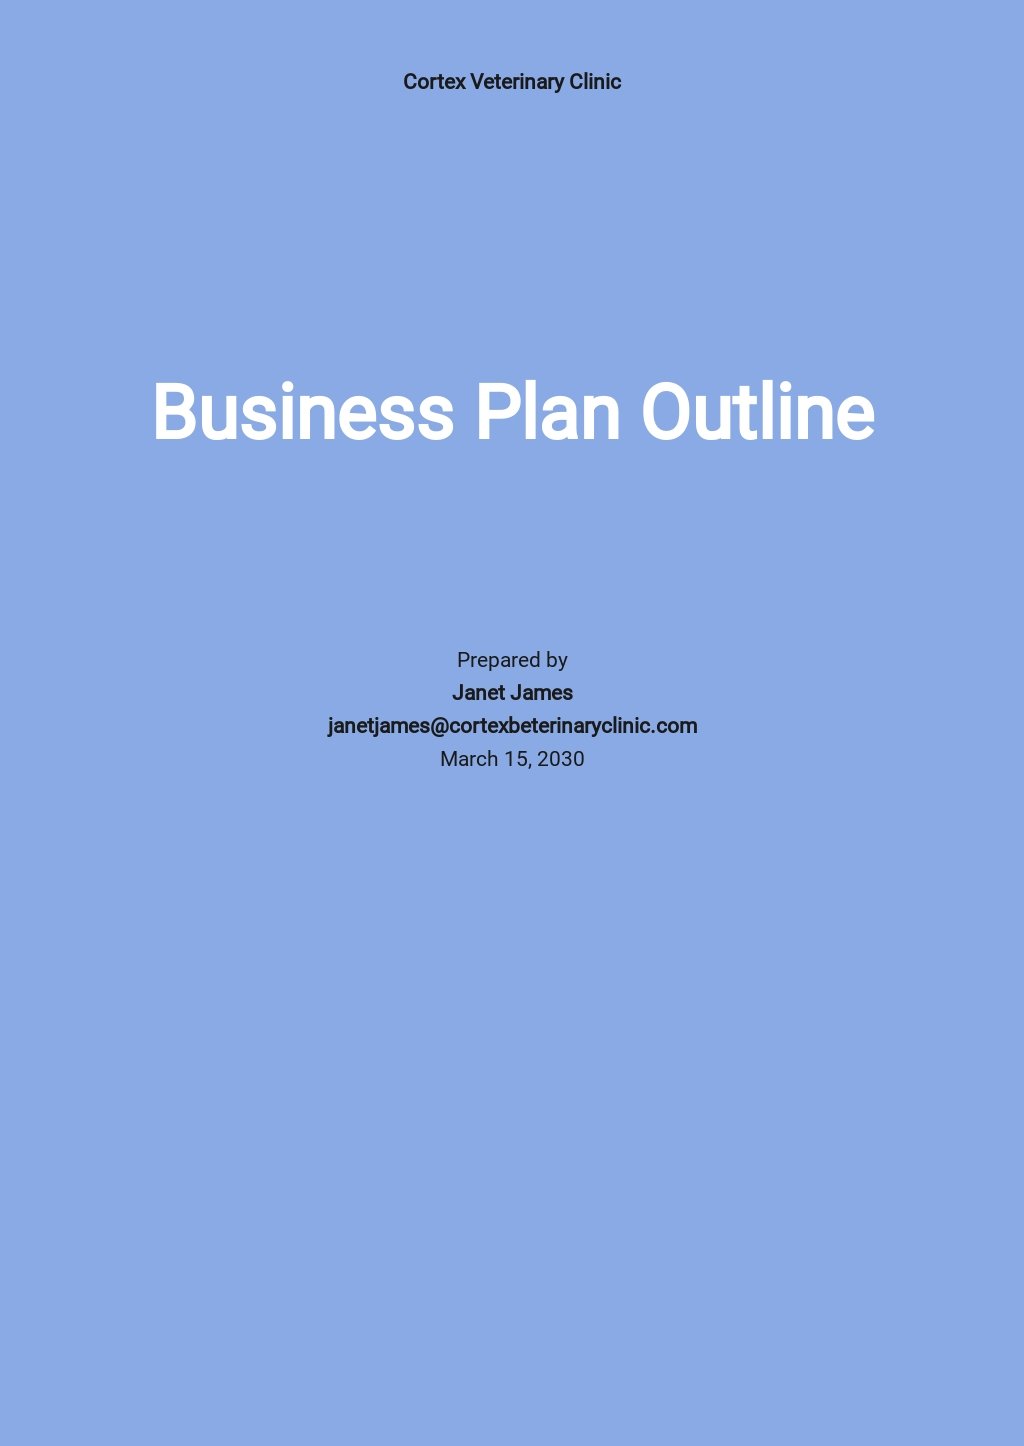 Sample Business Plan Outline Template.jpe